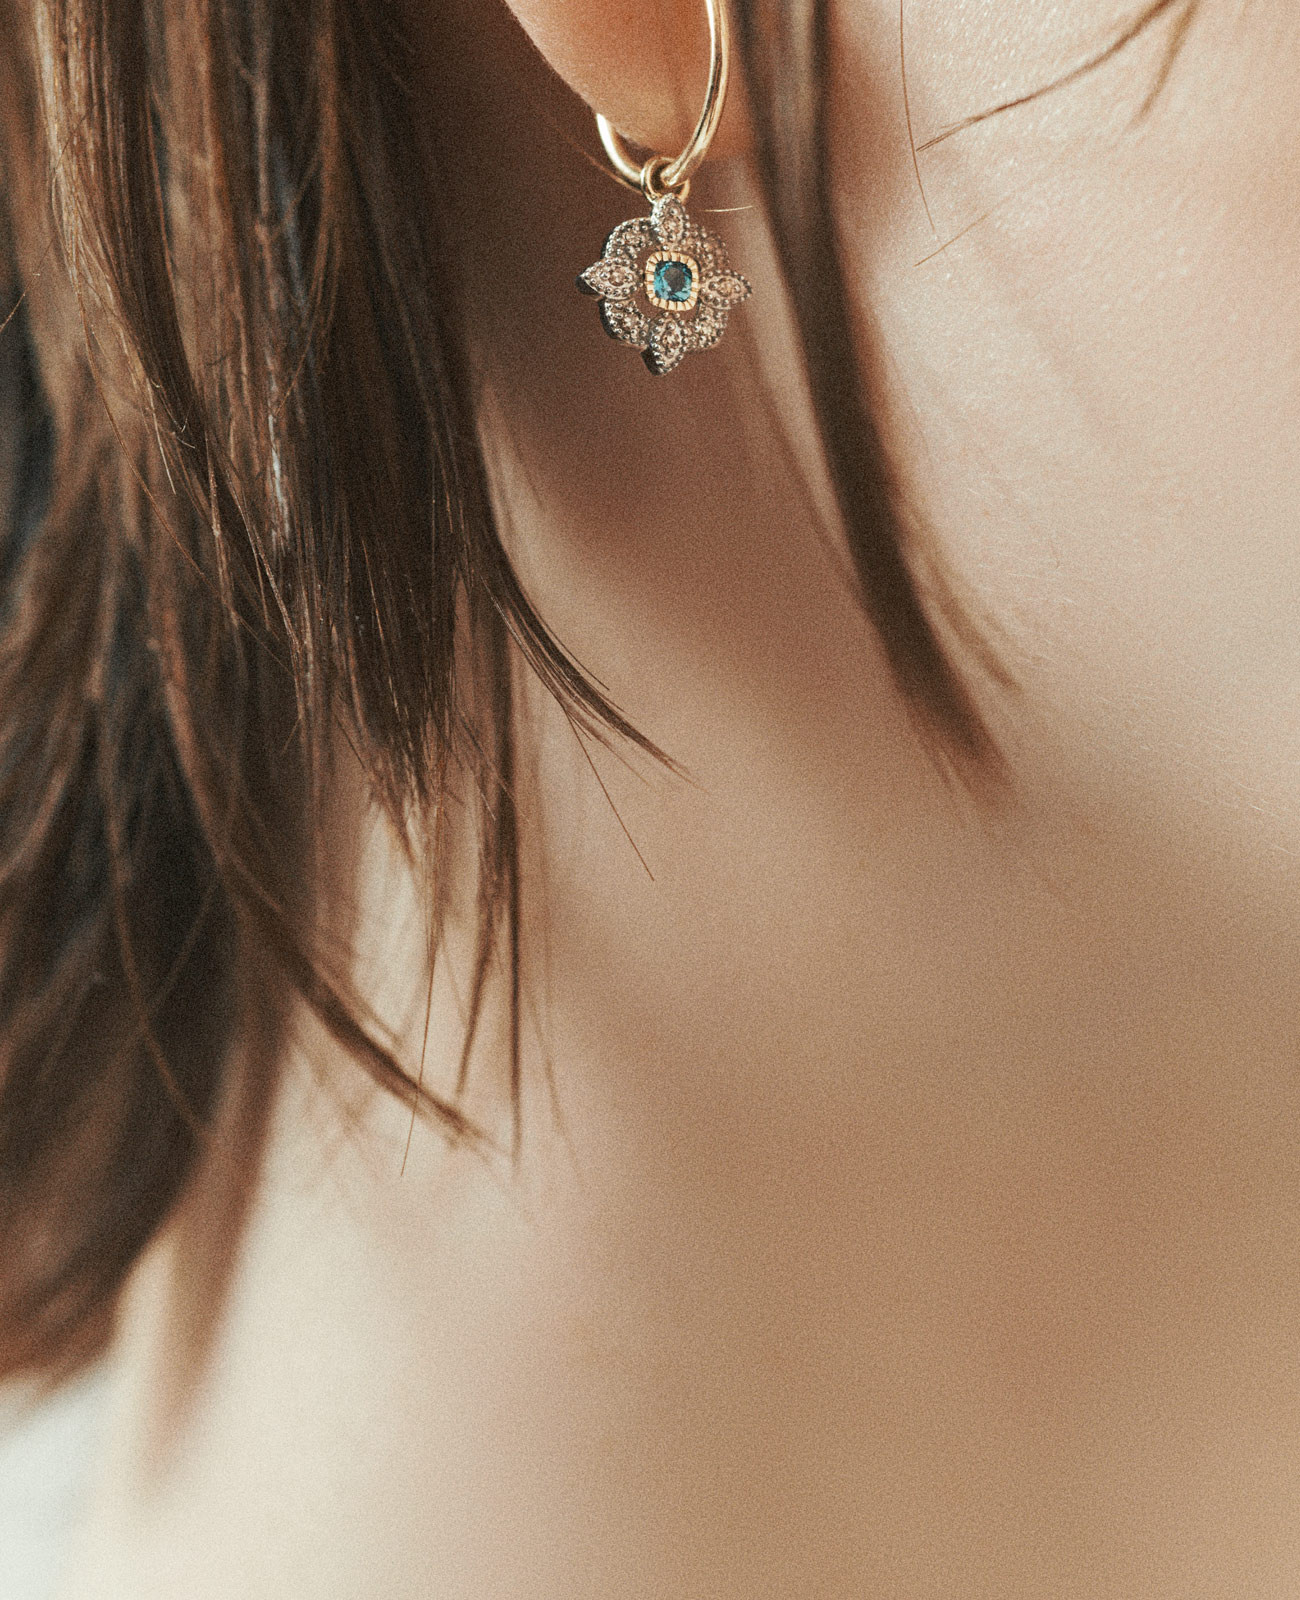 BETTINA LONDON BLUE TOPAZ earring pascale monvoisin jewelry paris